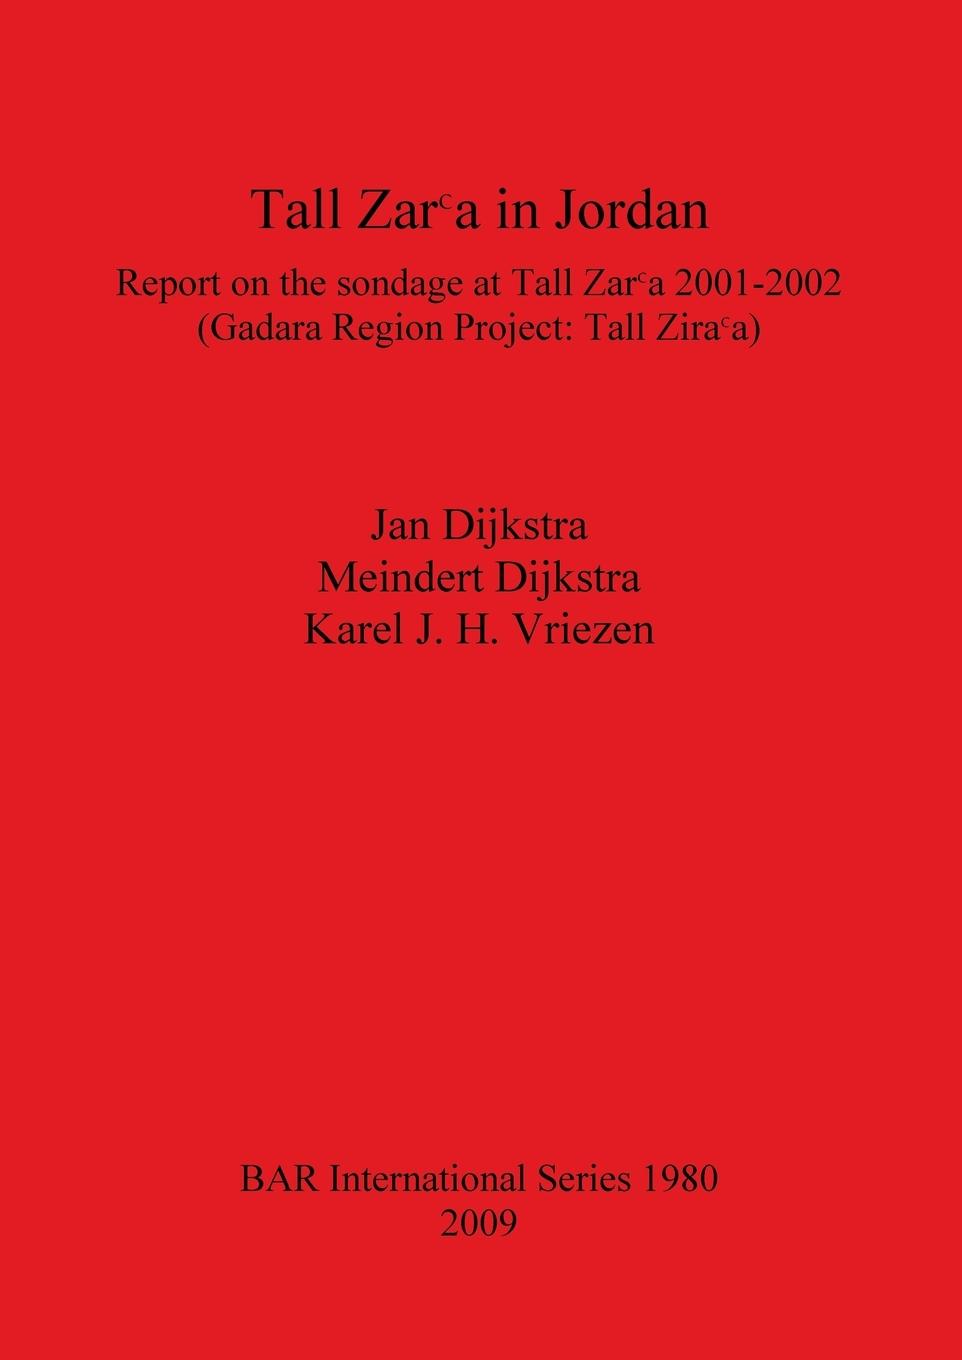 Tall Zarᶜa in Jordan: Report on the sondage at Tall Zarᶜa 2001-2002 (Gadara Region Project: Tall Zarᶜa) - Dijkstra, Jan|Dijkstra, Meindert|J. H. Vriezen, Karel